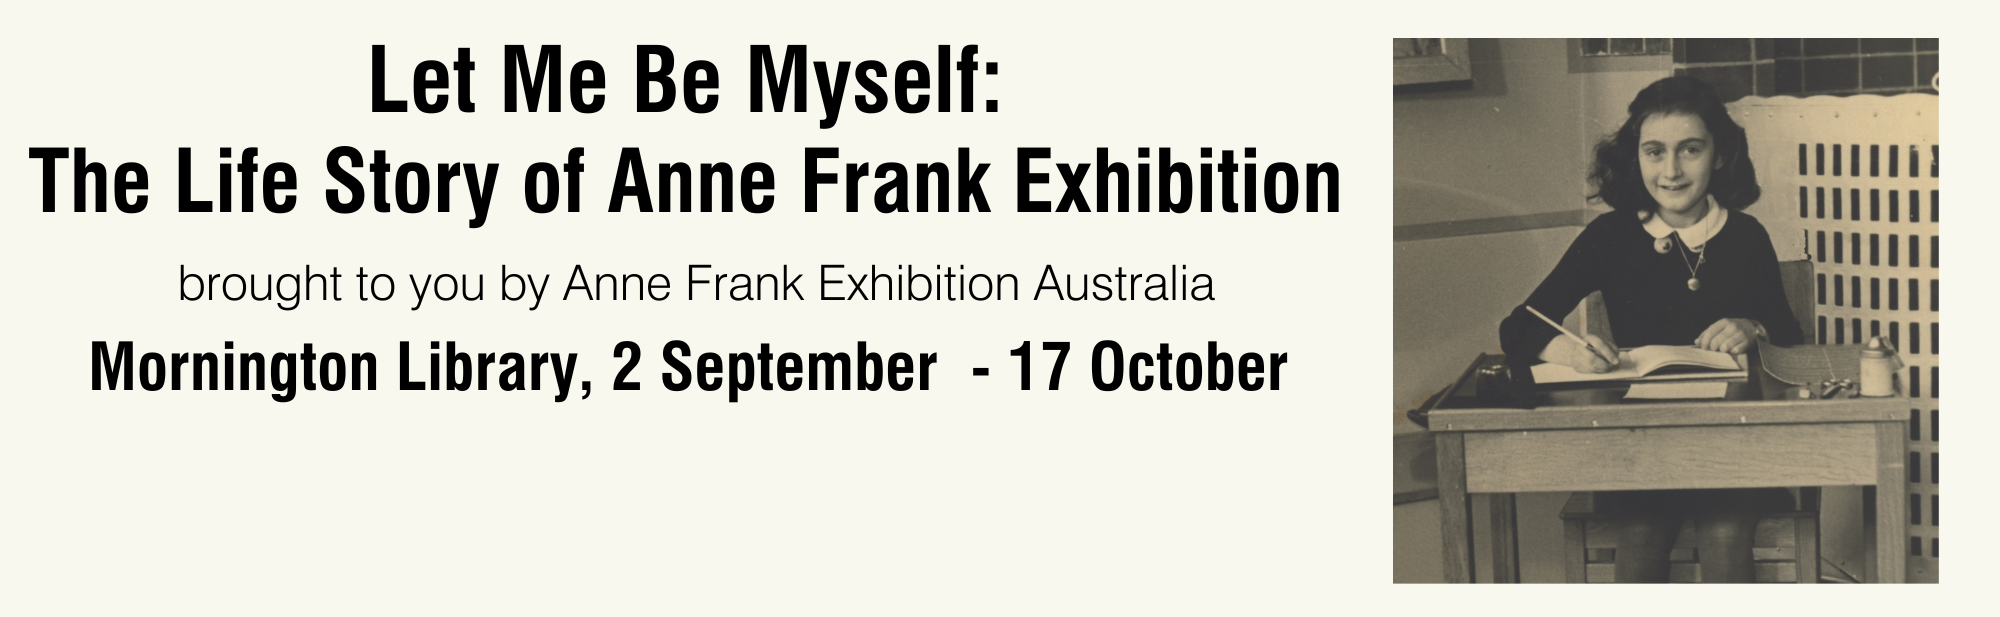 Anne Frank website